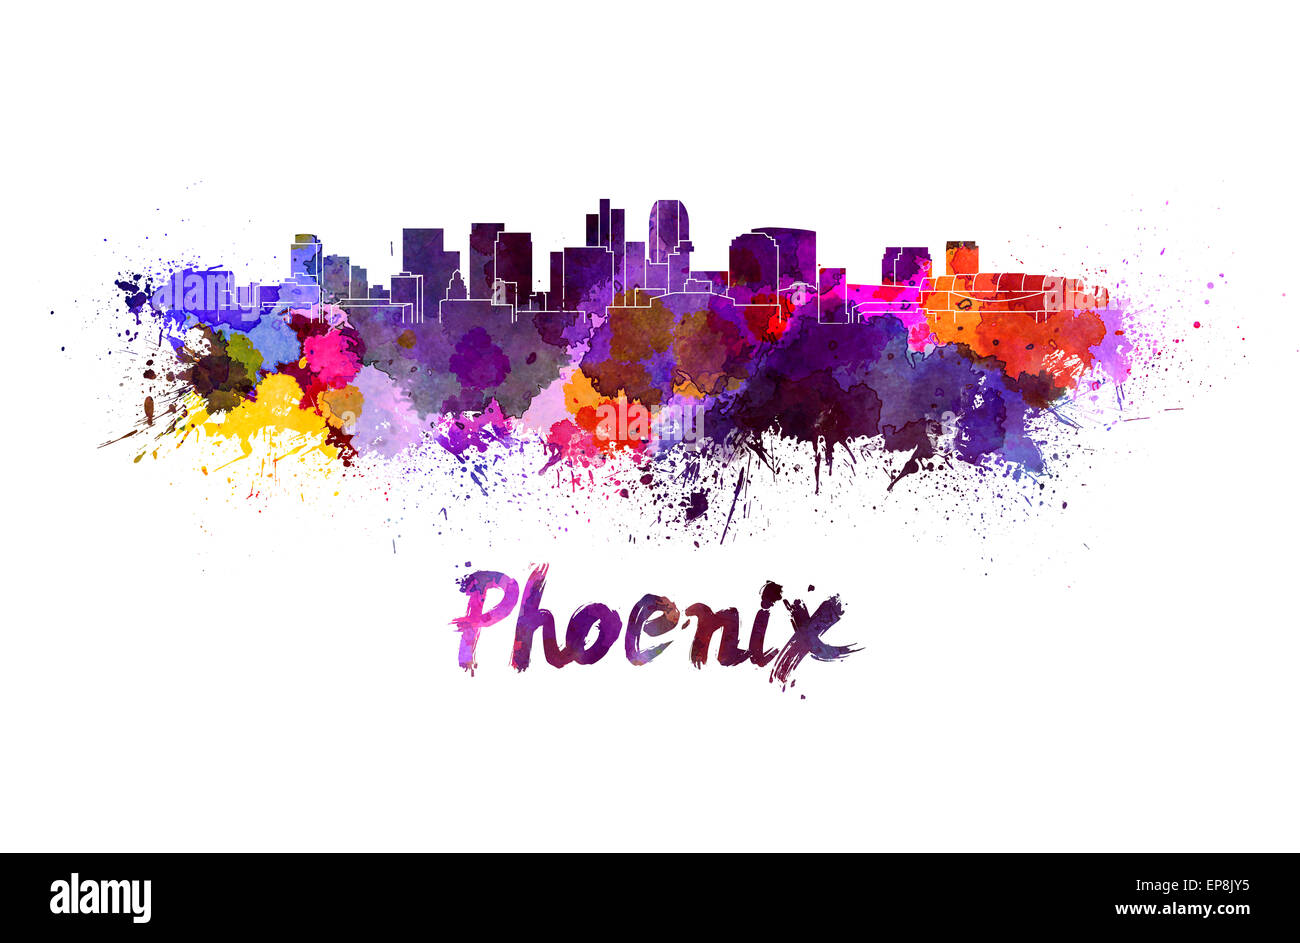 Phoenix skyline in watercolor splatters Stock Photo